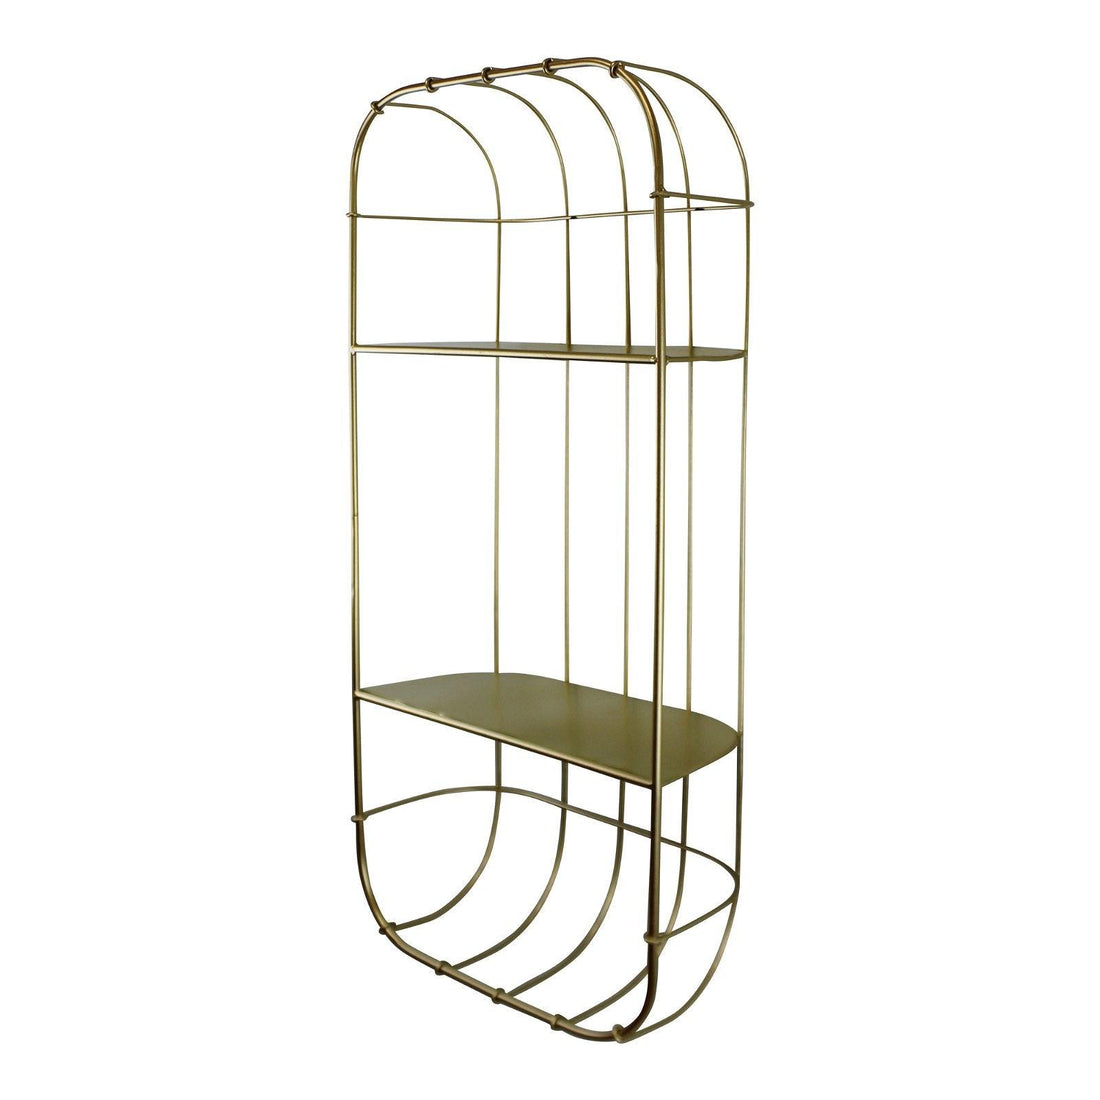 Gold Metal Wall Double Storage Shelf, Basket Design - £26.99 - Wall Hanging Shelving 